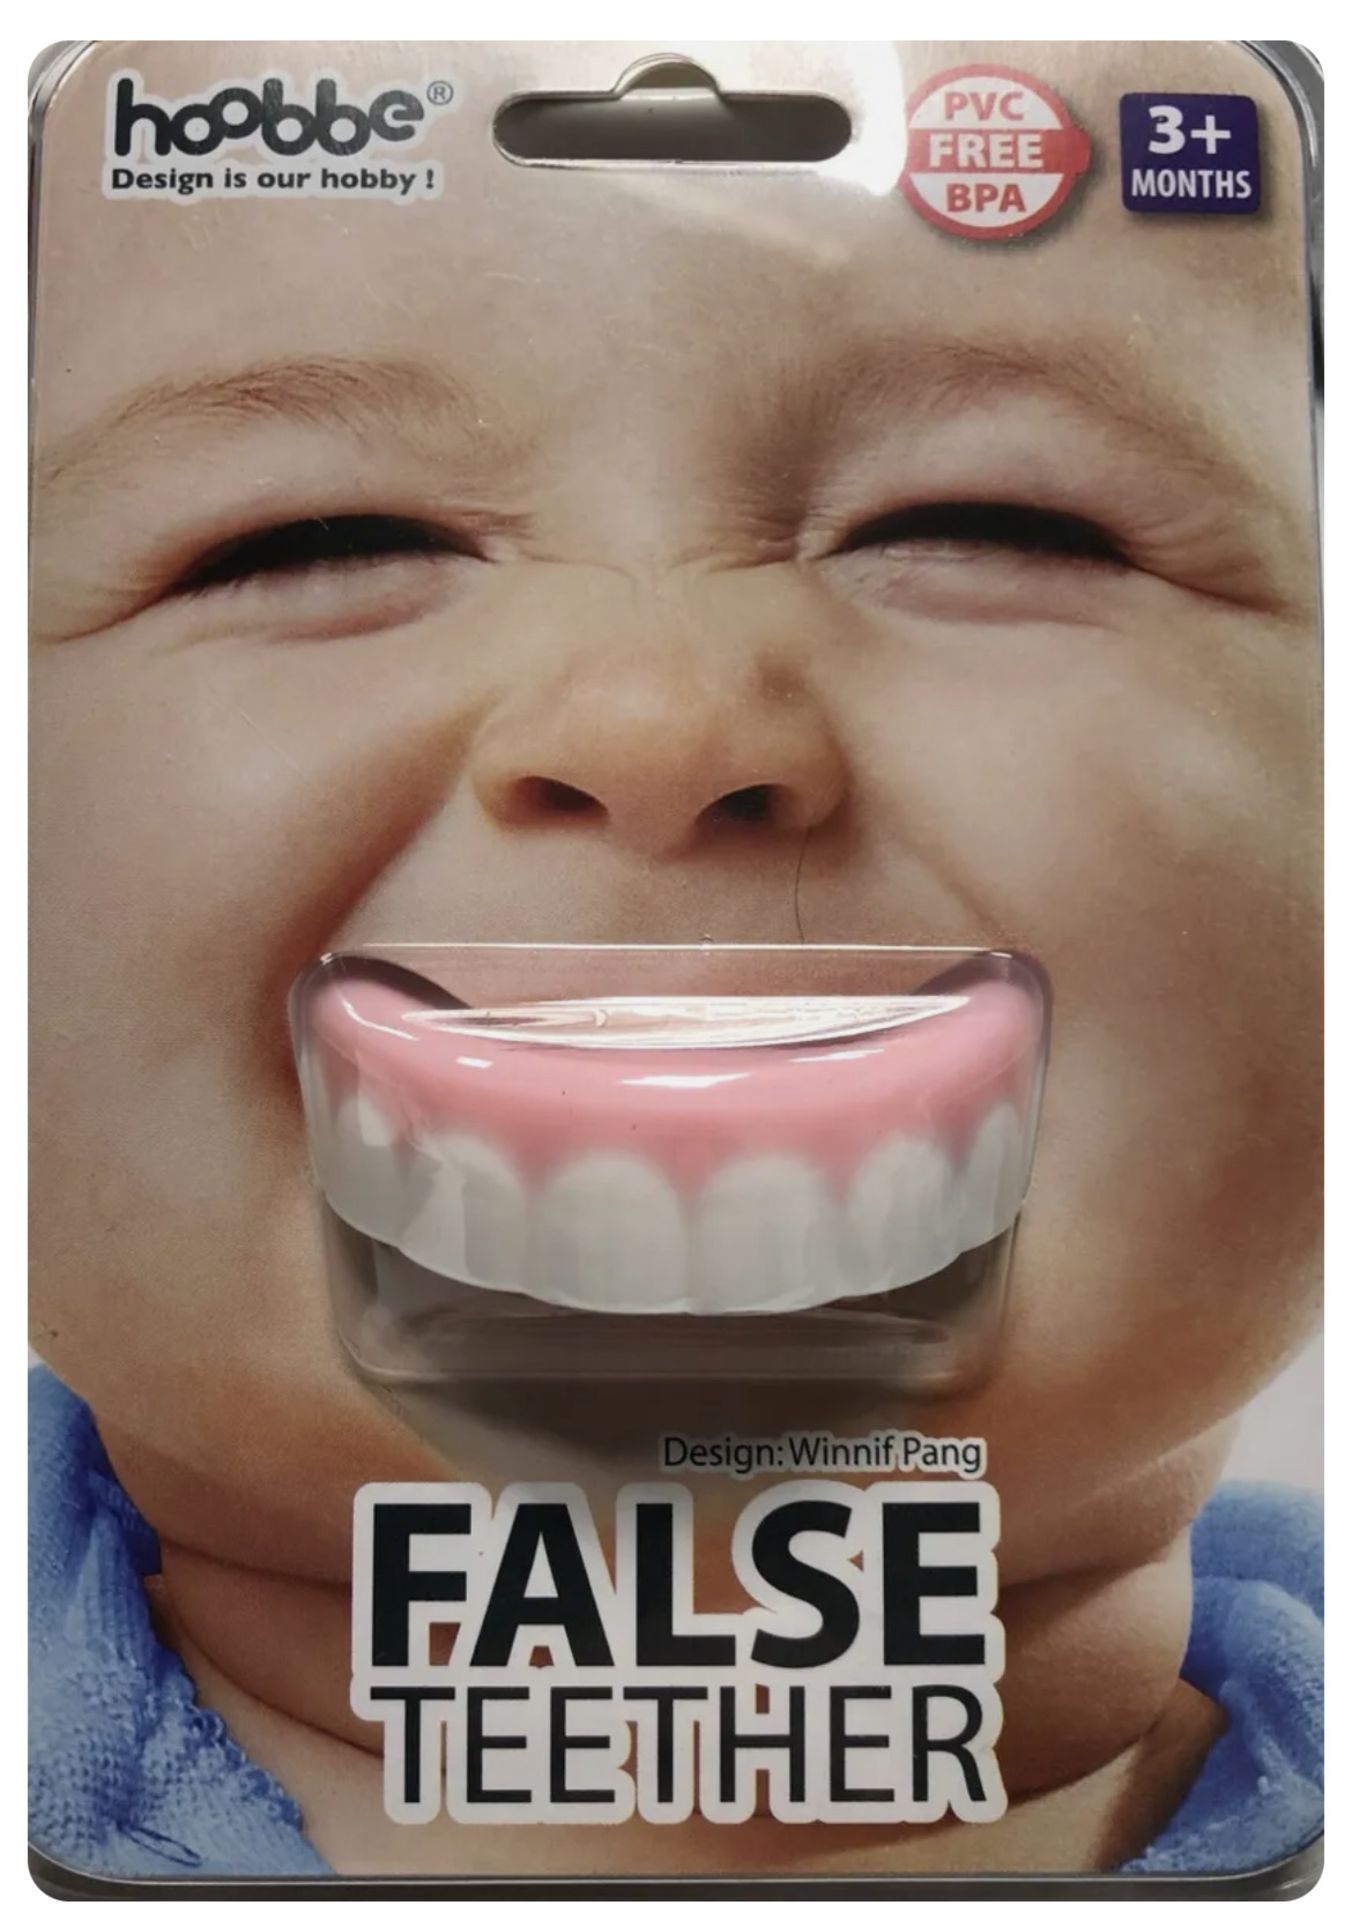 72 Ã— Hoobbe Novelty False Novelty Teether - (NEW) - RRP Â£573.84 - Image 4 of 6